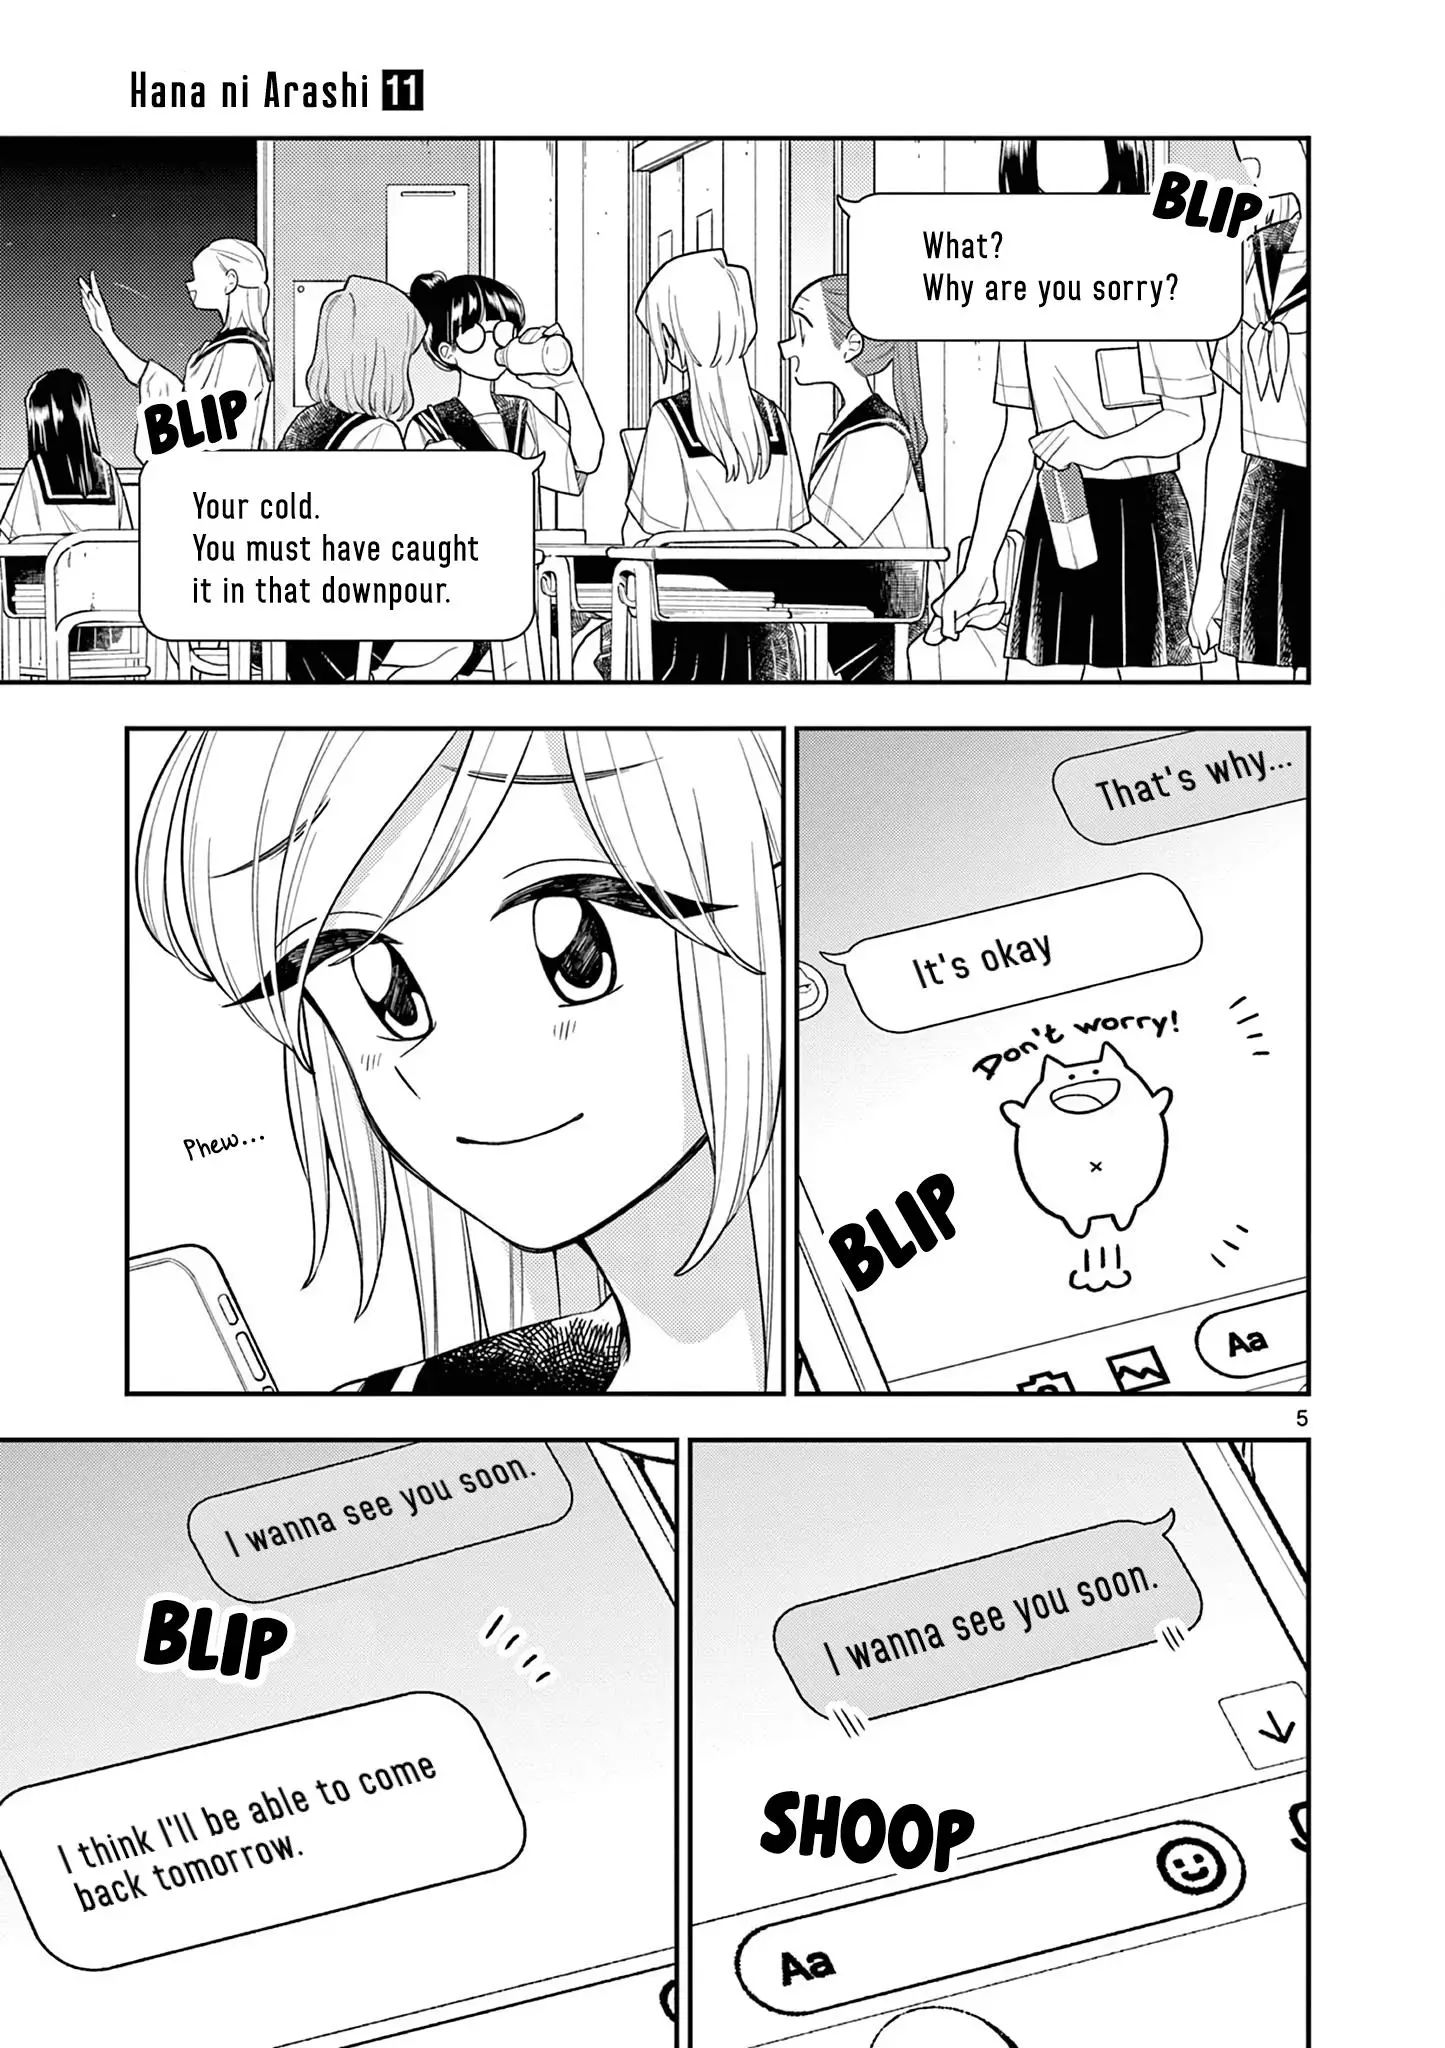 Hana Ni Arashi - 130 page 5-39c14af2